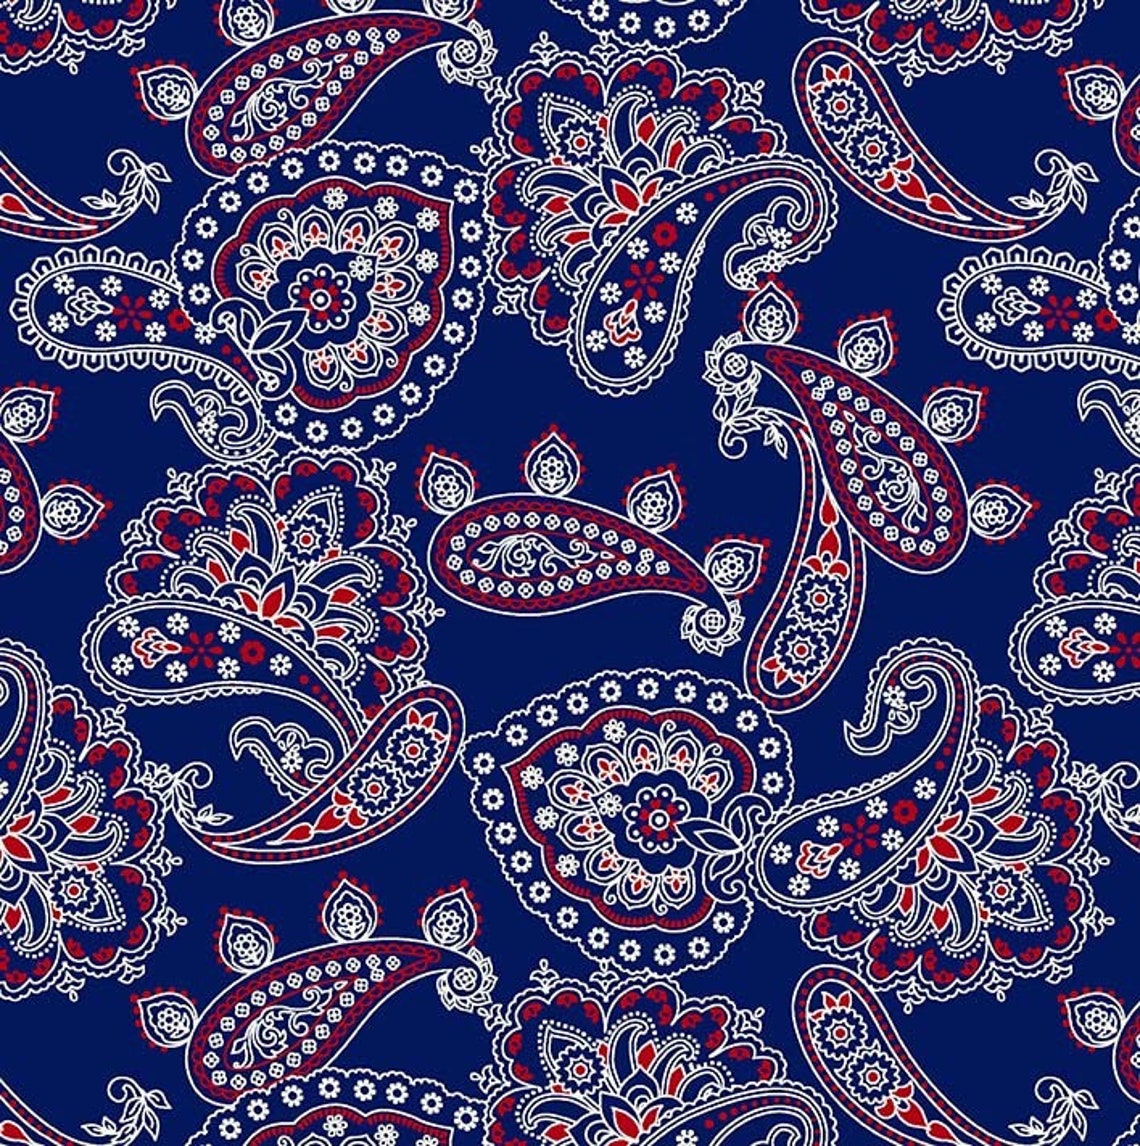 Bandana Fabric By The Yard Bandana Allover Blue Michael | Etsy